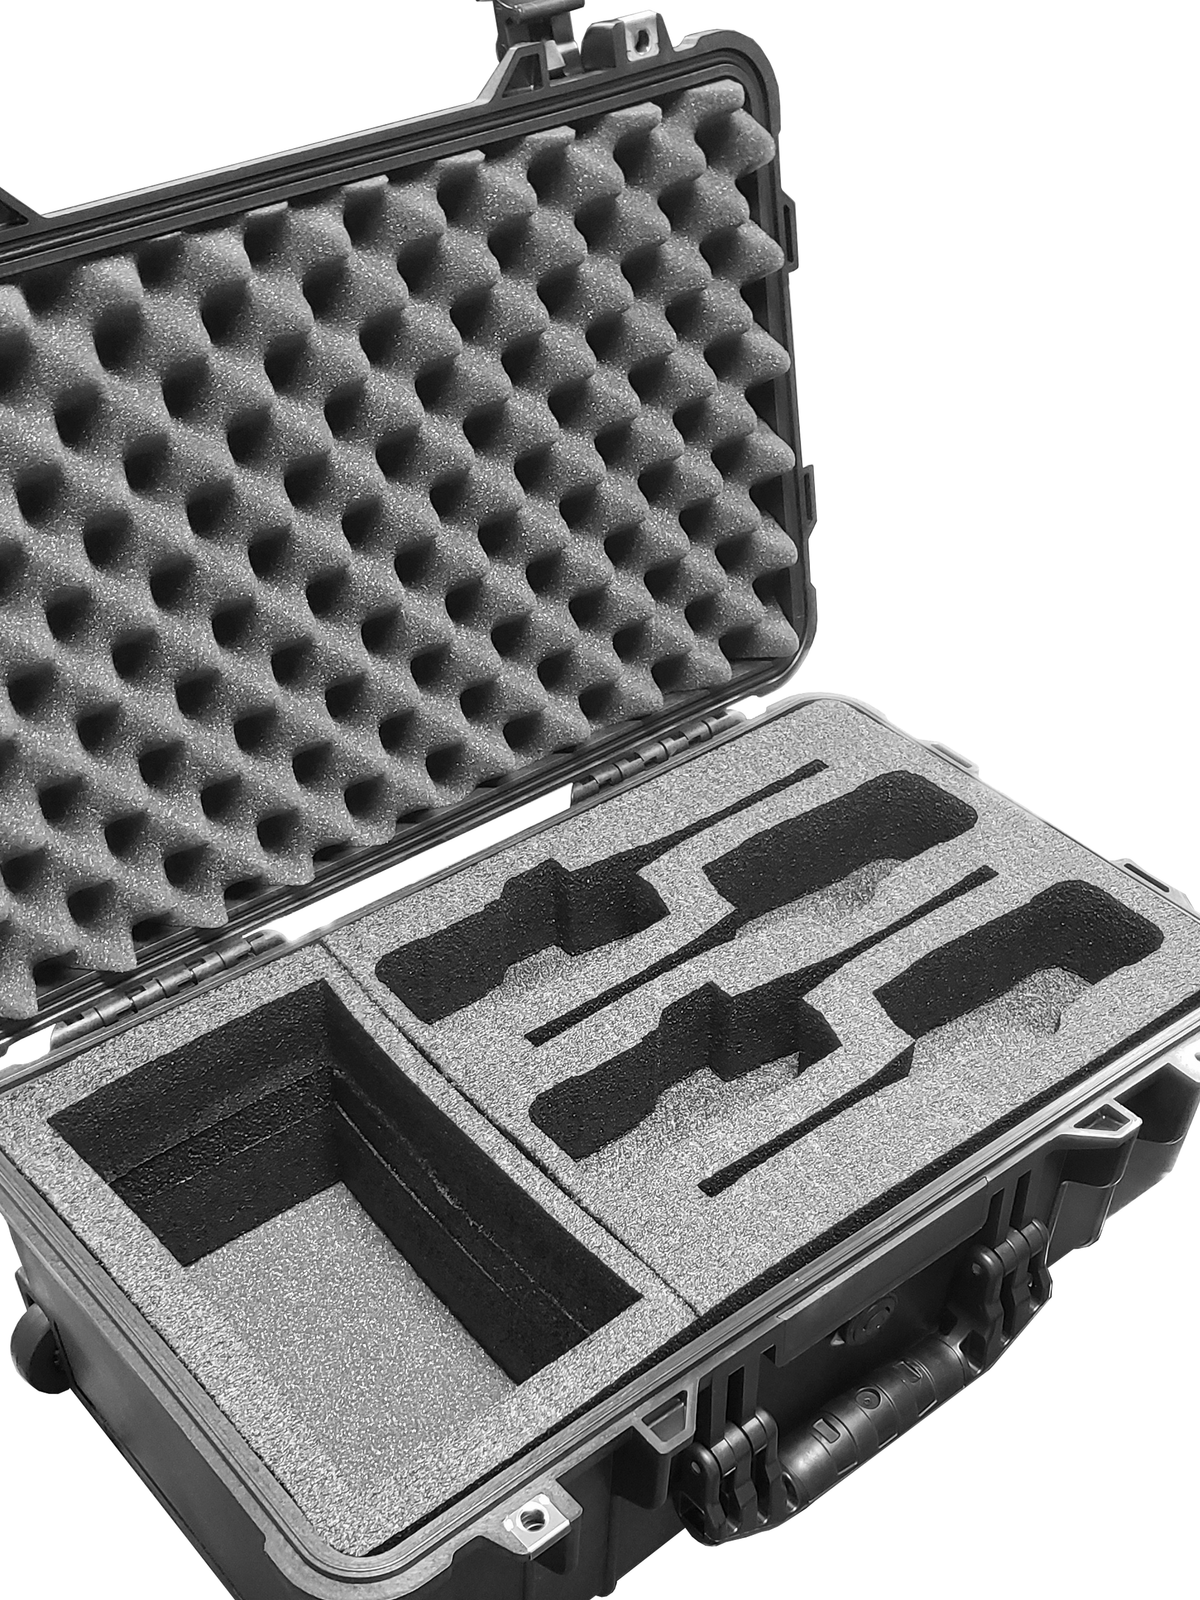 TELESIN Hard Case with Custom Foam Insert for DJI OA-CPX-001 B&H